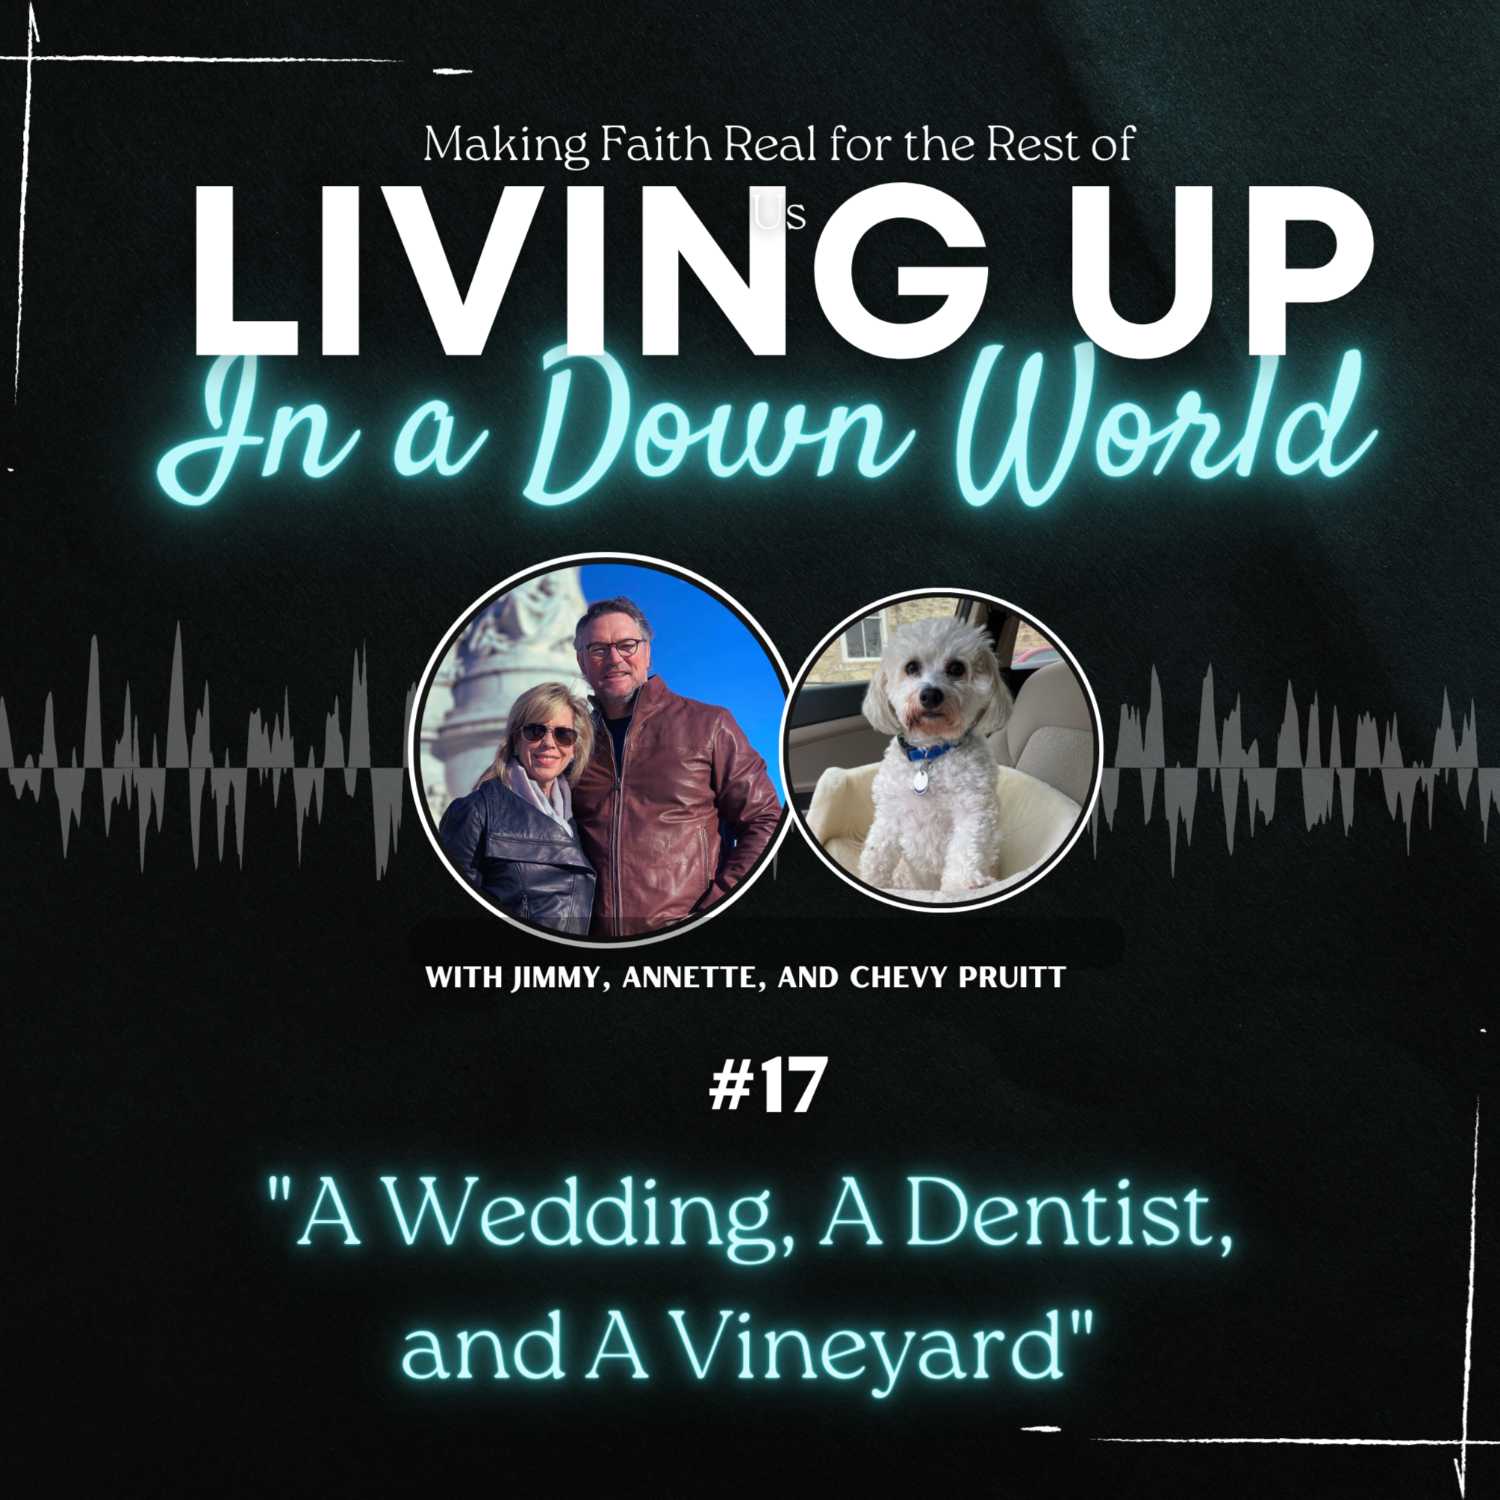 "A Wedding, A Dentist, and A Vineyard"